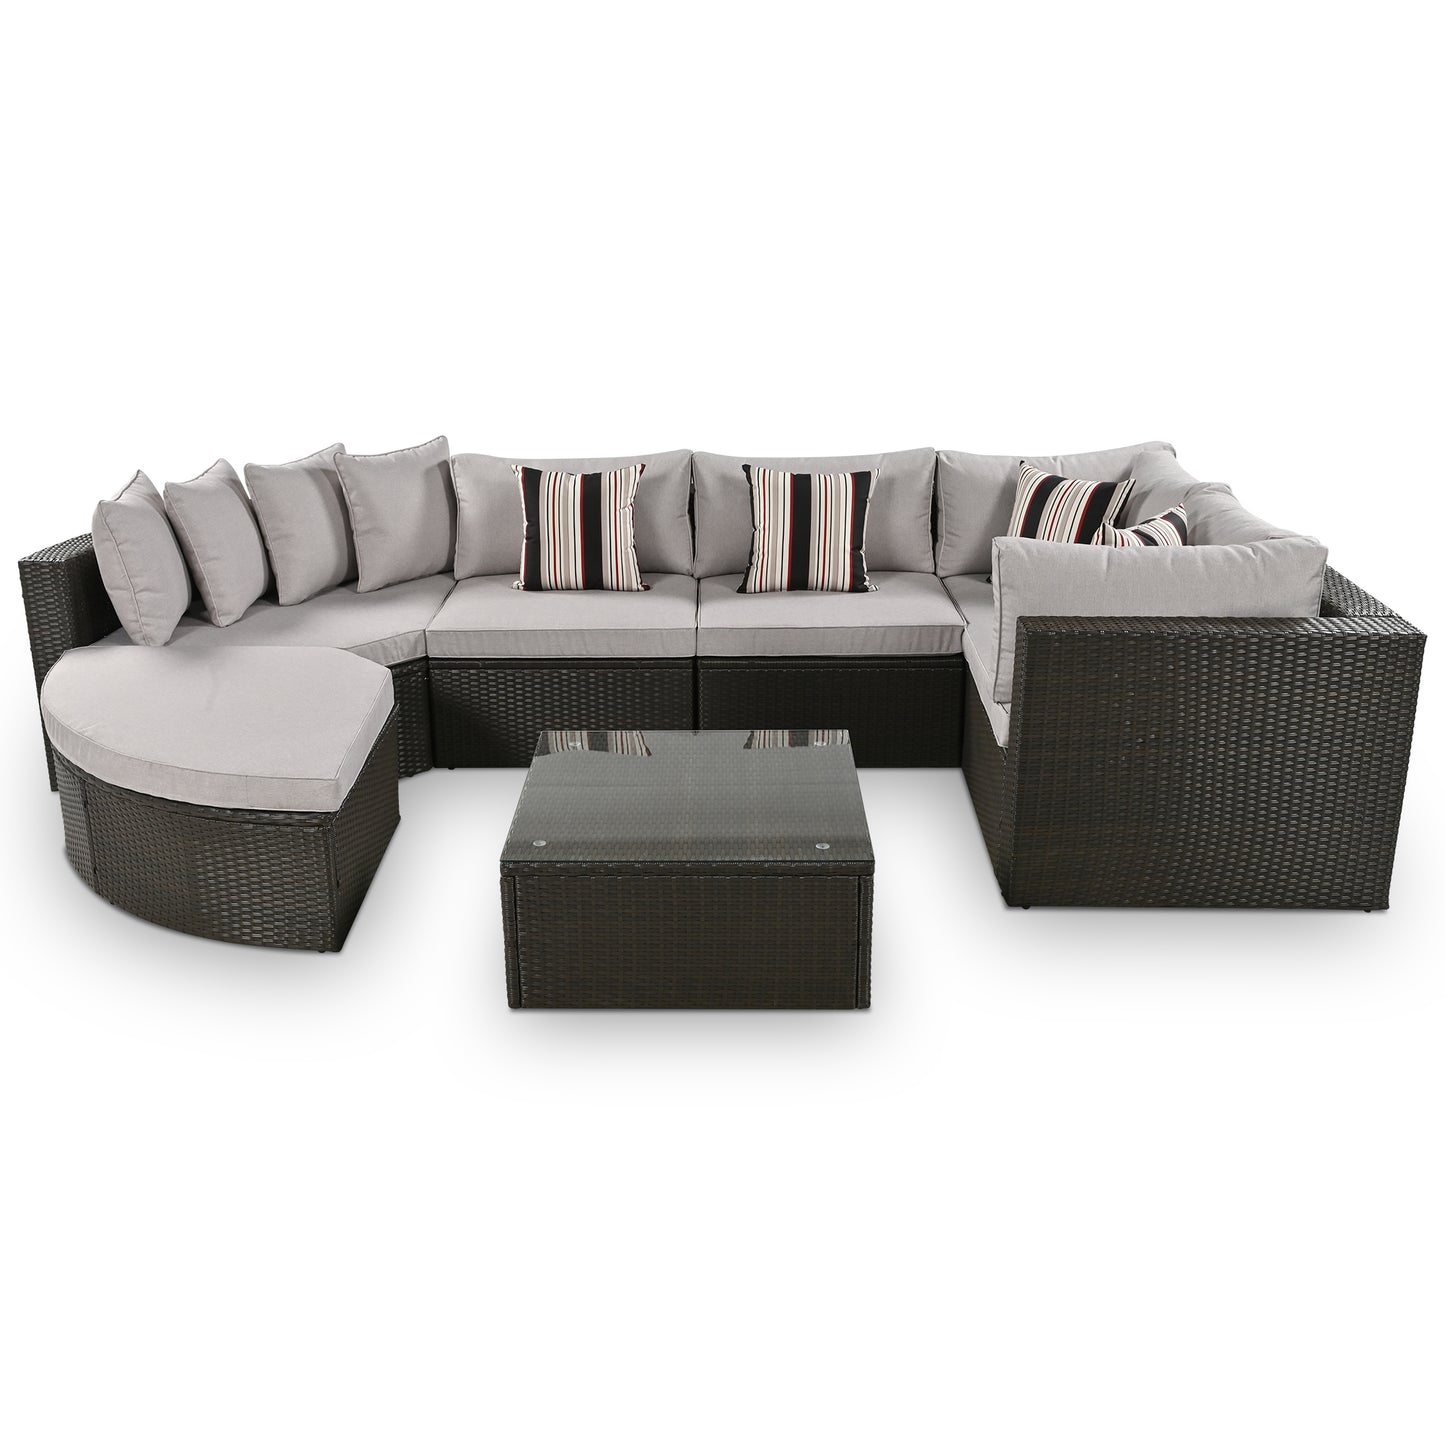 GO 7-piece Outdoor Wicker Sofa Set, Rattan Sofa Lounger, With  Colorful Pillows, Conversation Sofa, For Patio, Garden, Deck, Brown Wicker, Gray Cushion